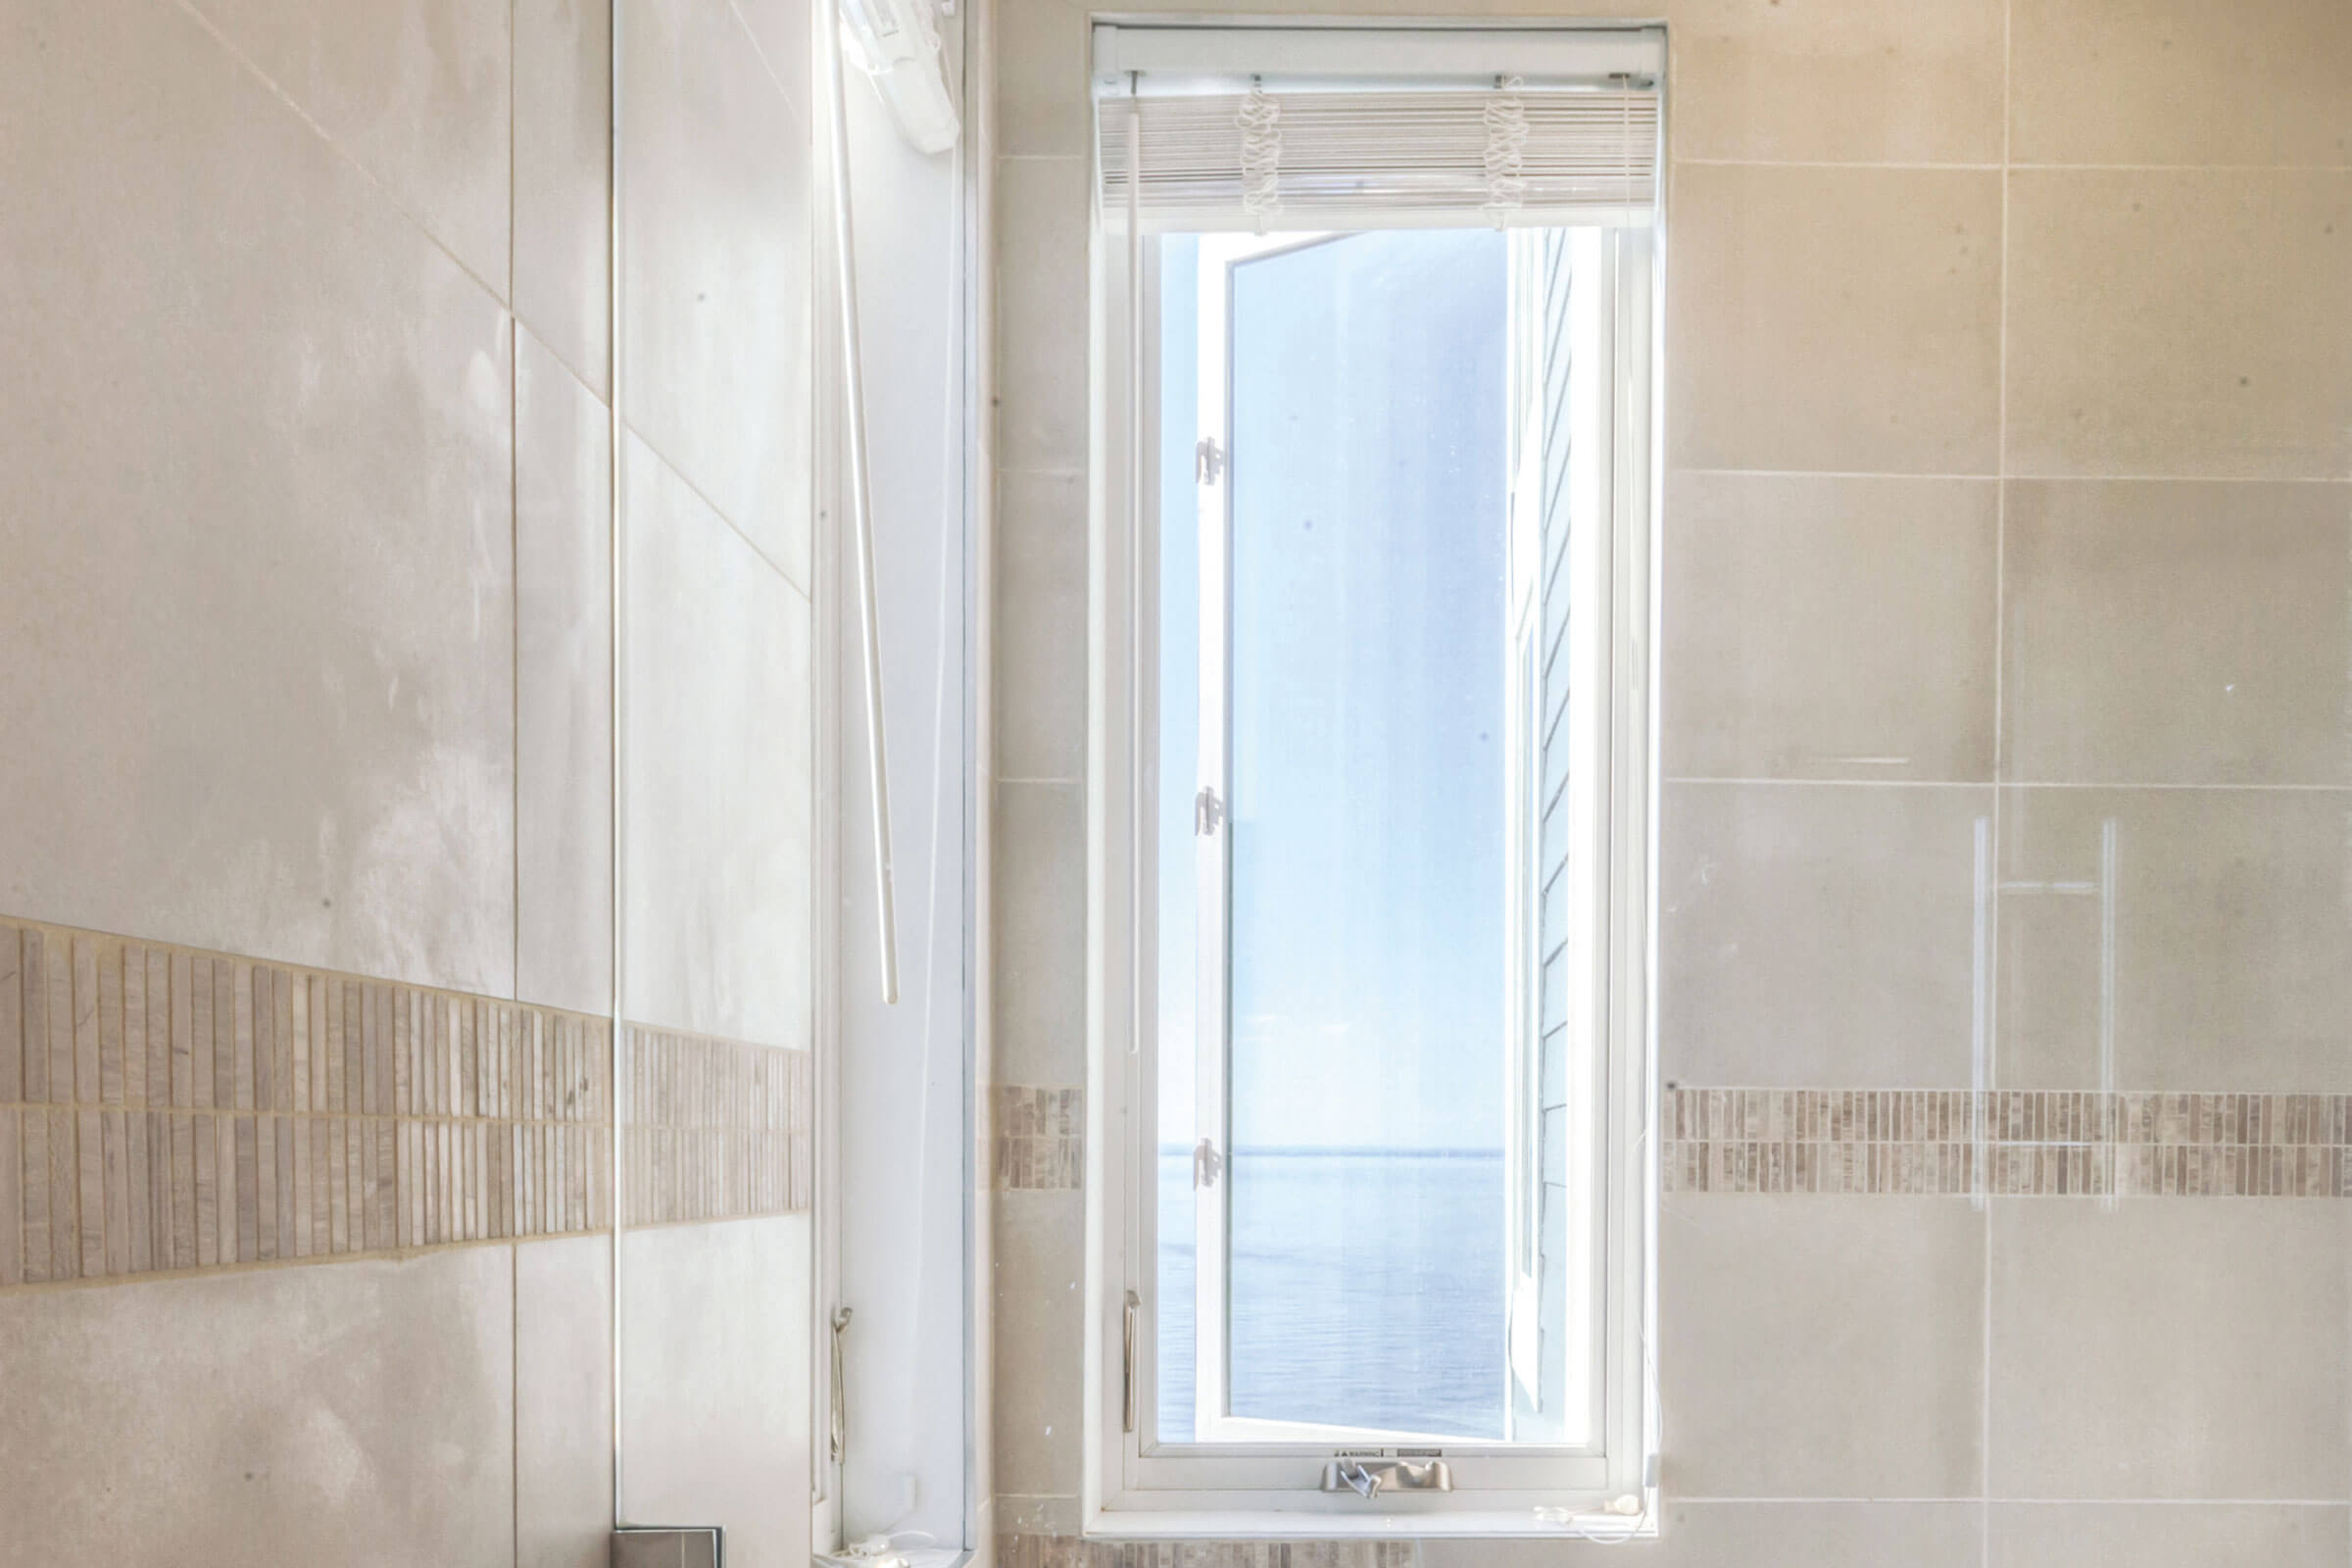 Bathroom With Essential Casement Window